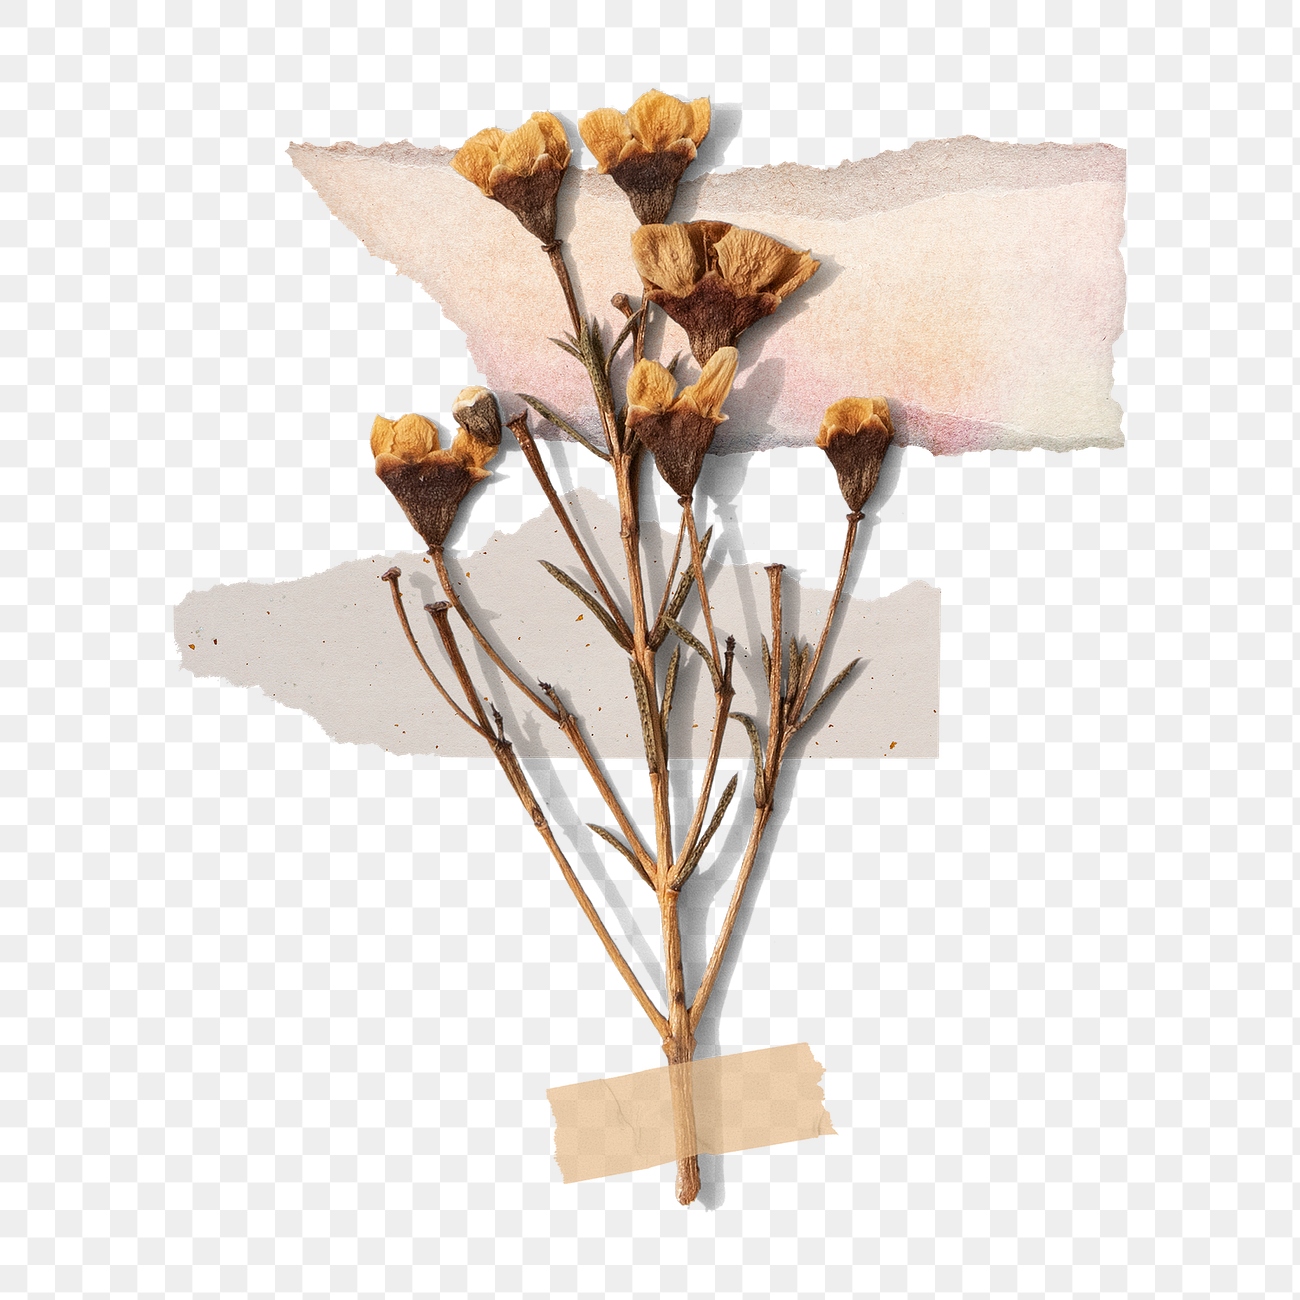 Dried flower png clipart, Autumn | Premium PNG Sticker - rawpixel